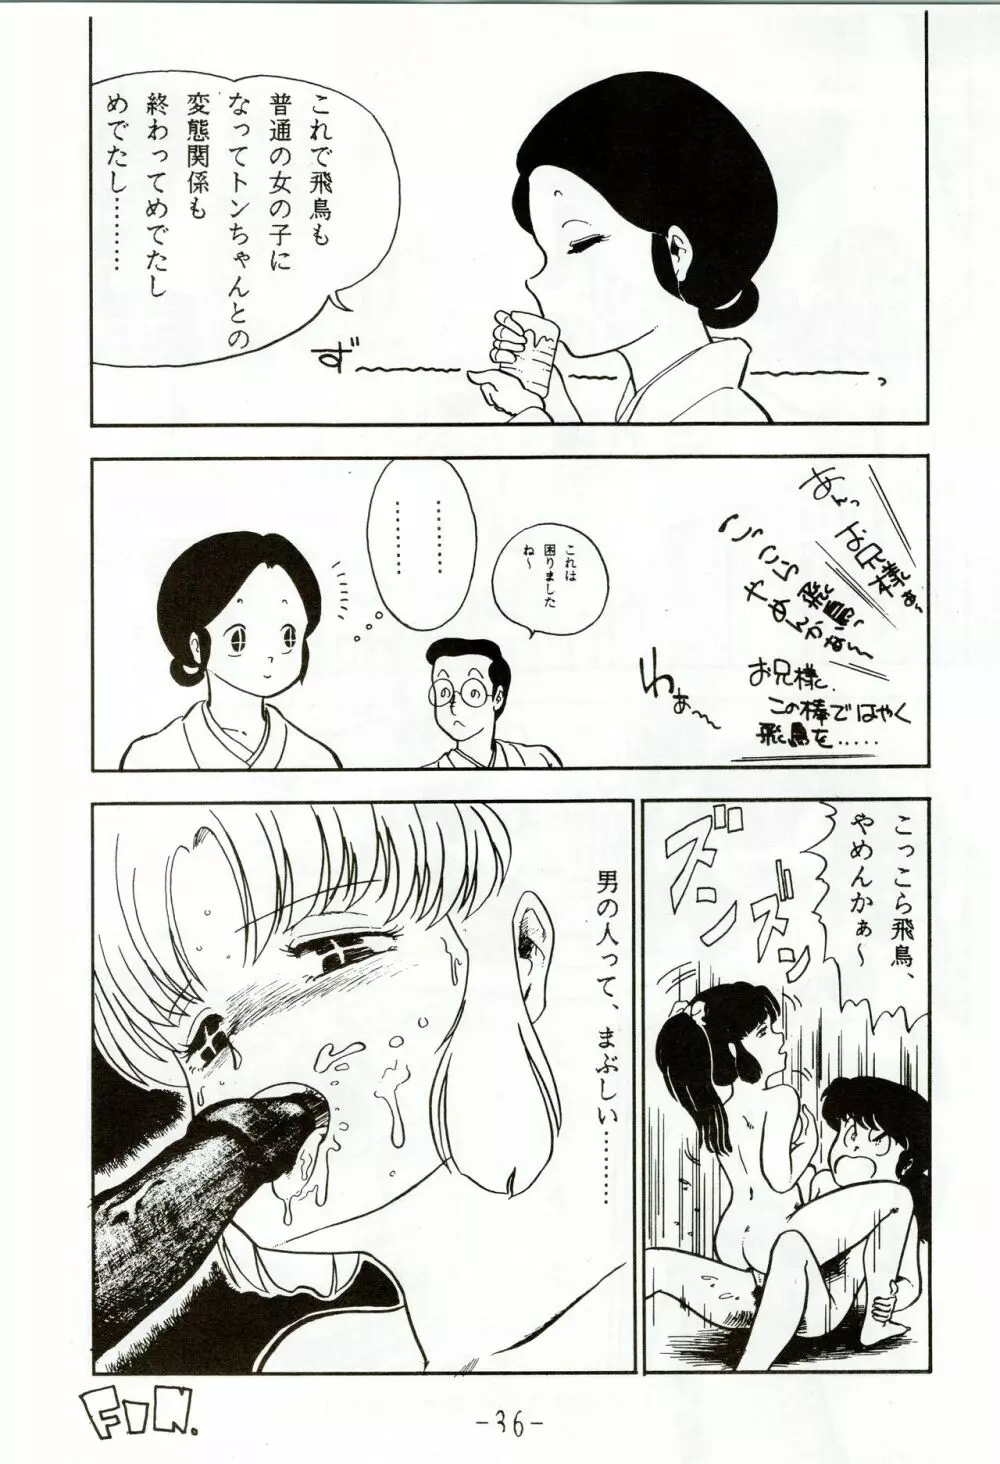 甲冑伝説 - page36